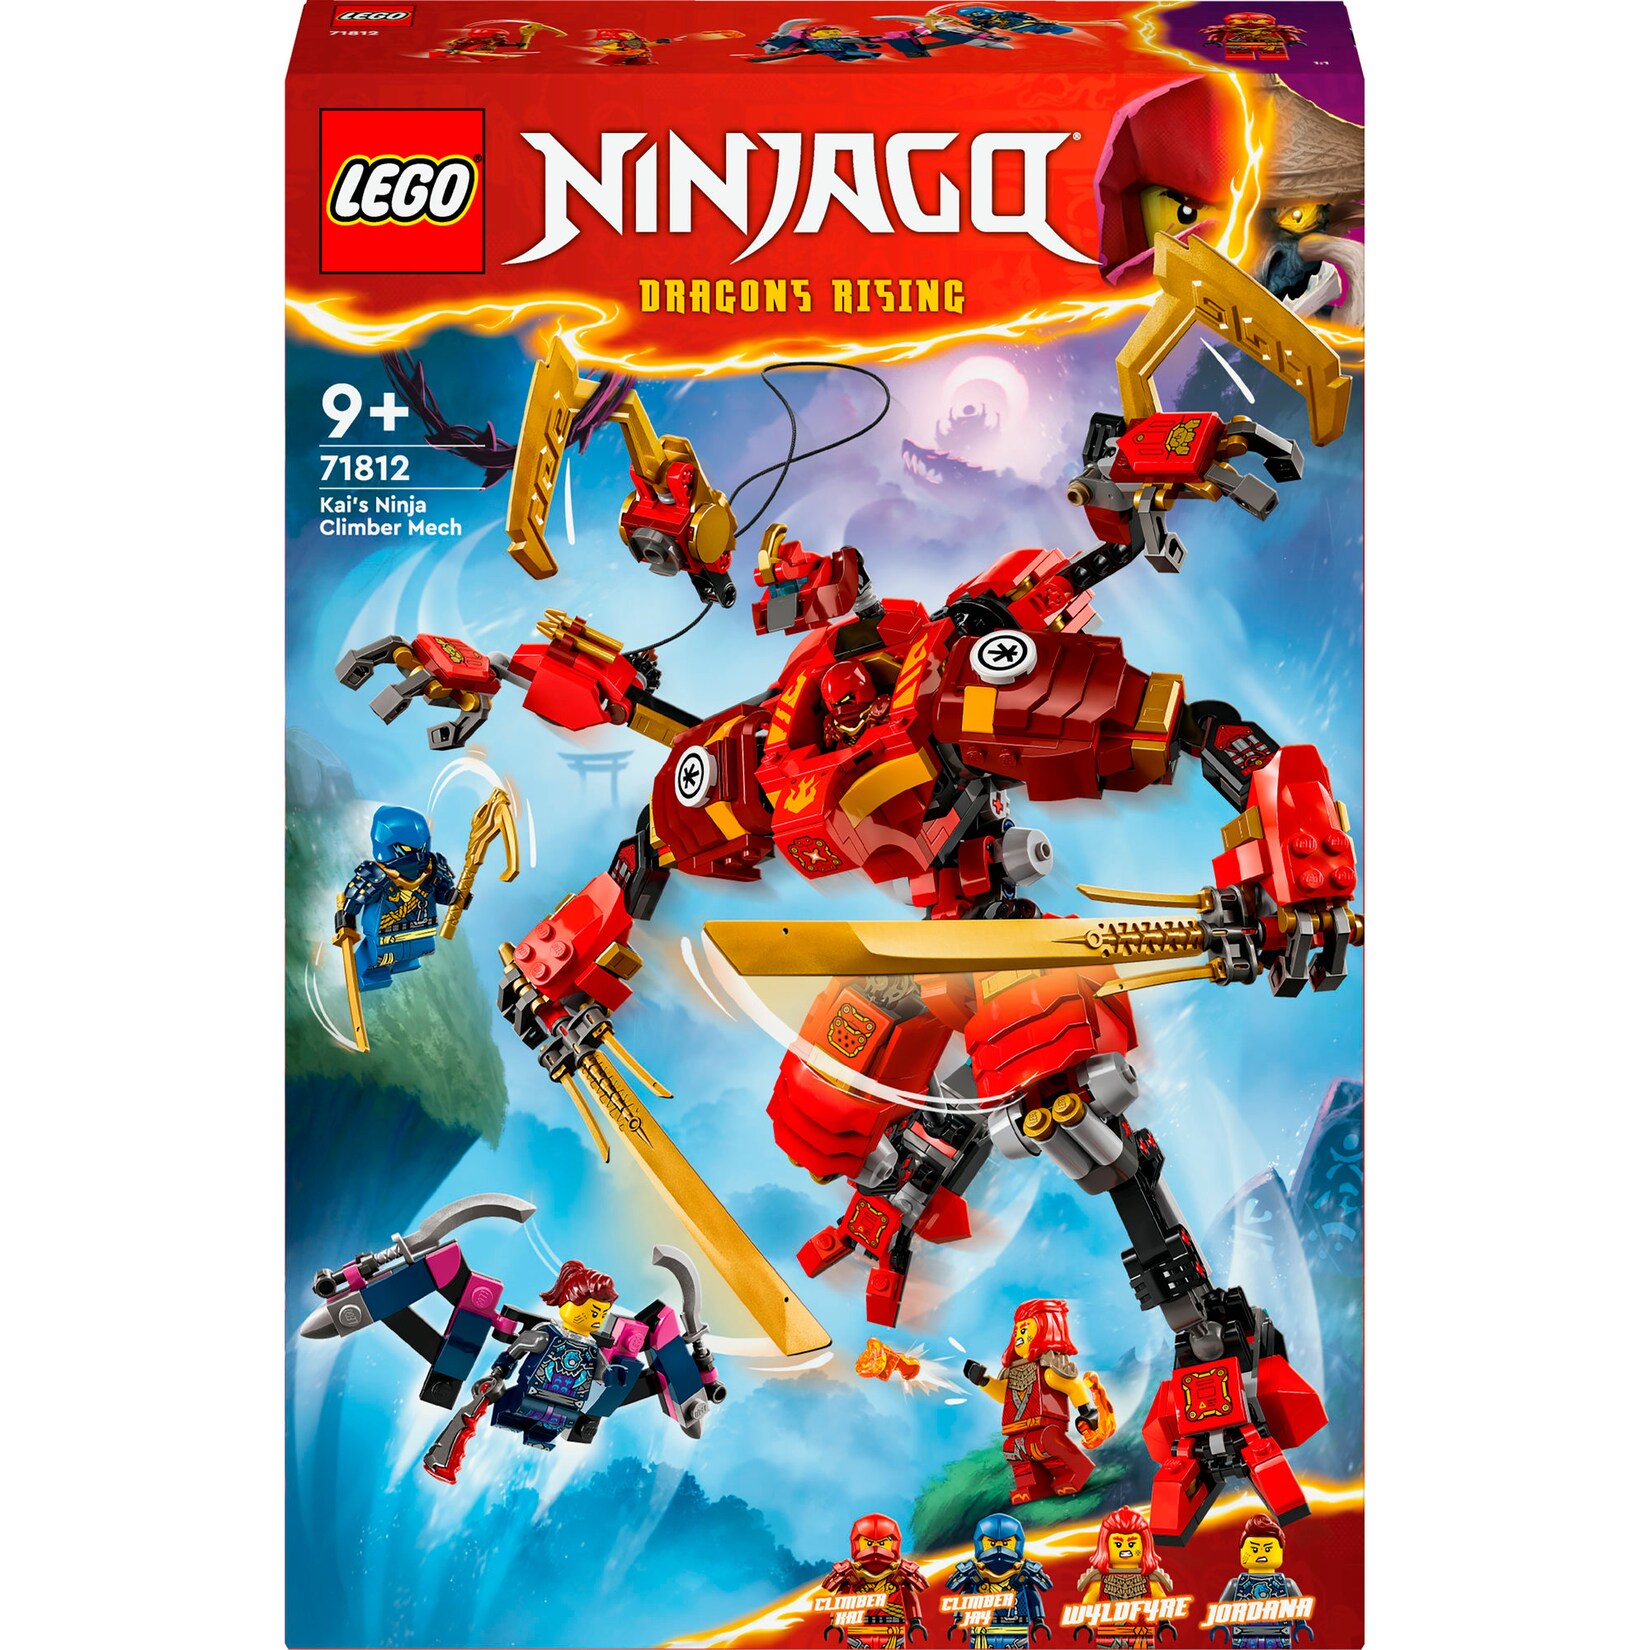 LEGO Konstruktionsspielzeug Ninjago Kais Ninja-Kletter-Mech